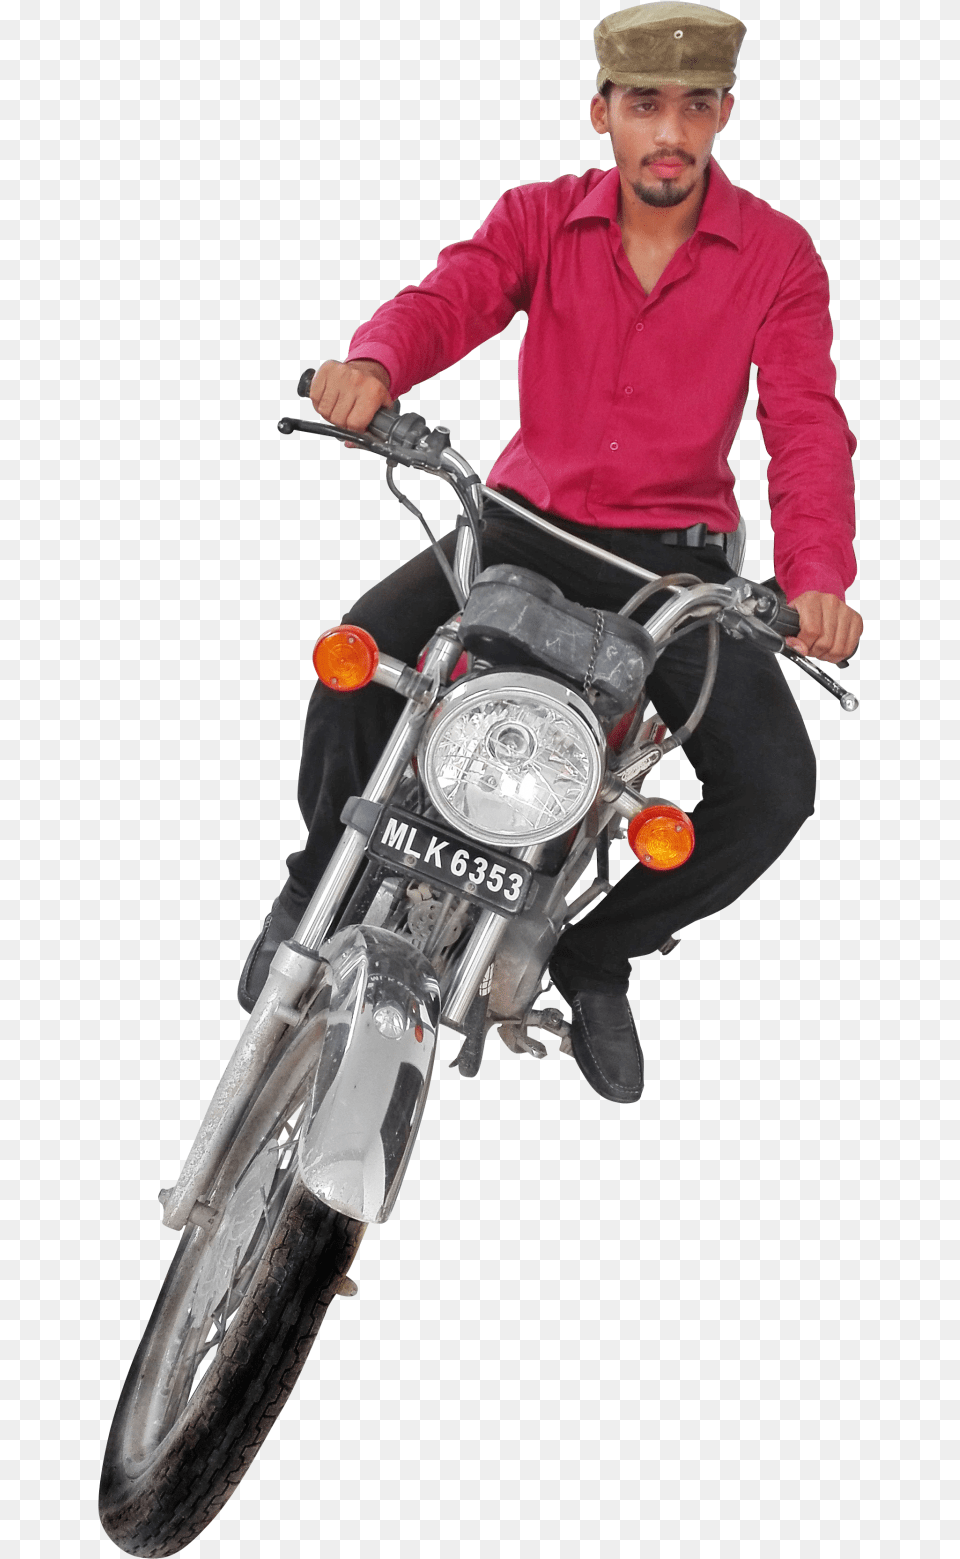 Indian Boy On A Motorbike Motorcycle, Vehicle, Transportation, Spoke, Machine Png